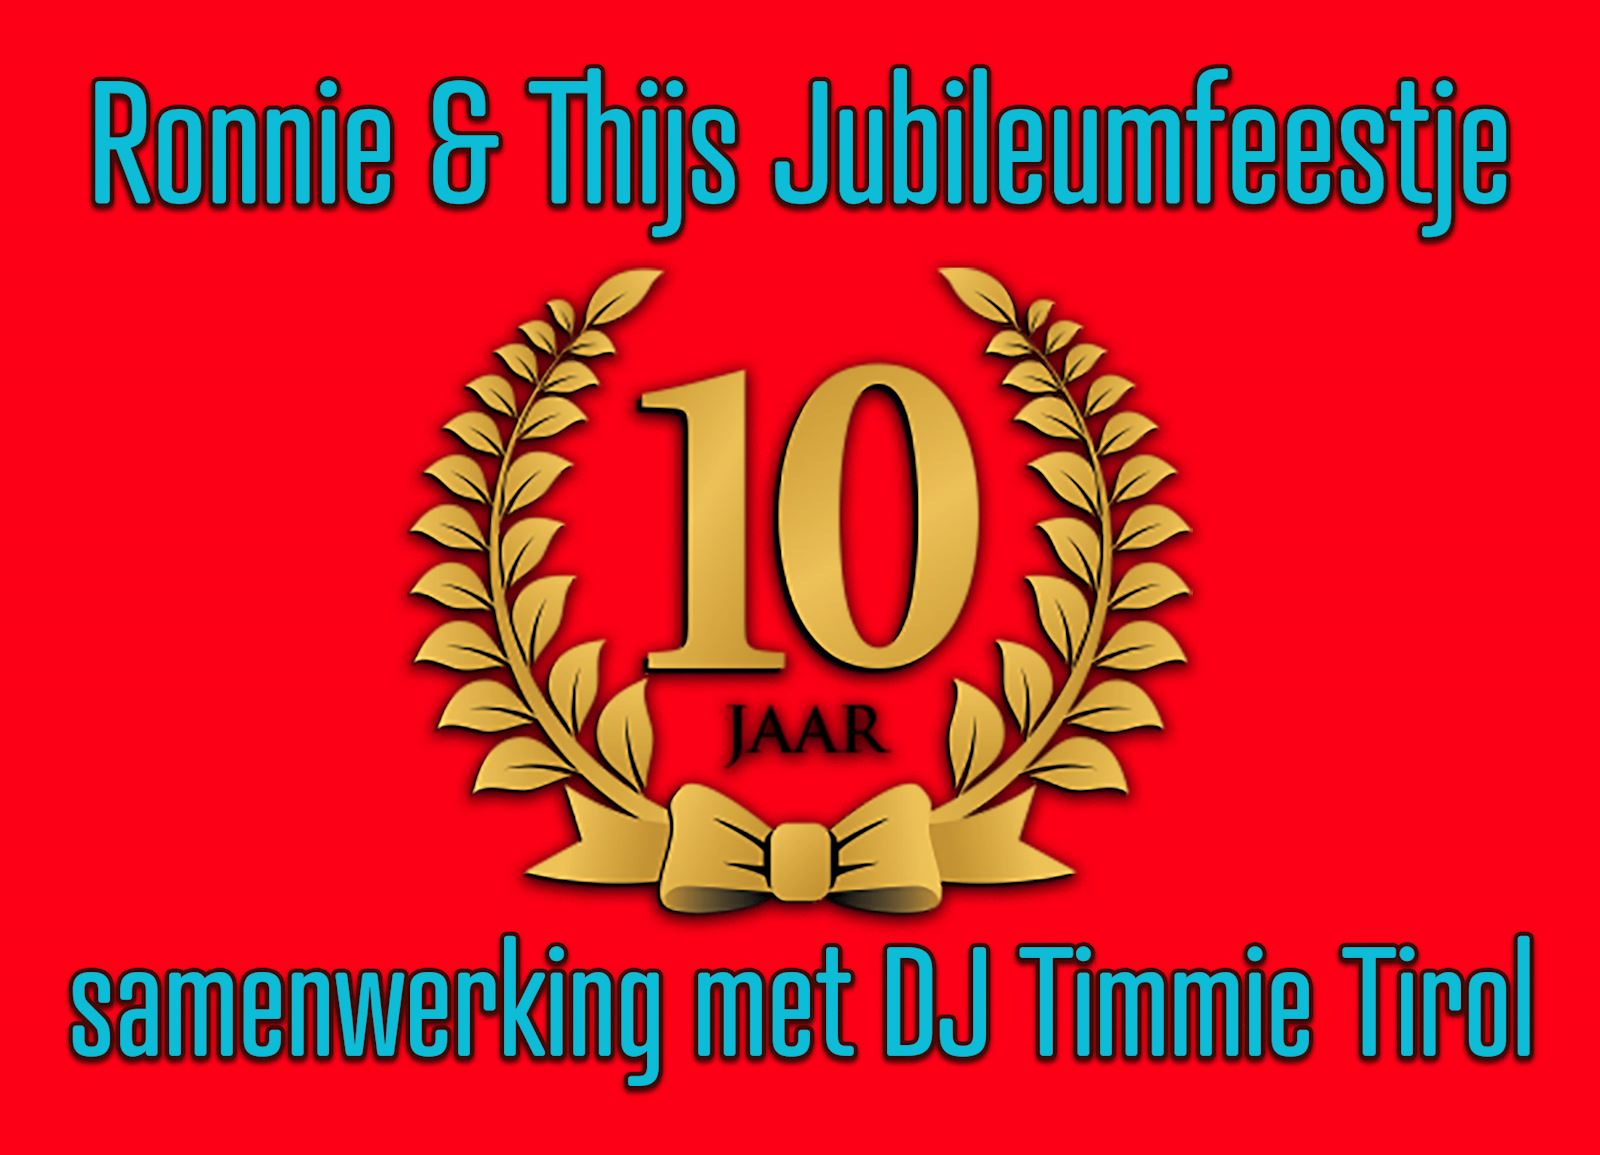 DJ_Timmie_Tirol_Ronnie_en_Thijs